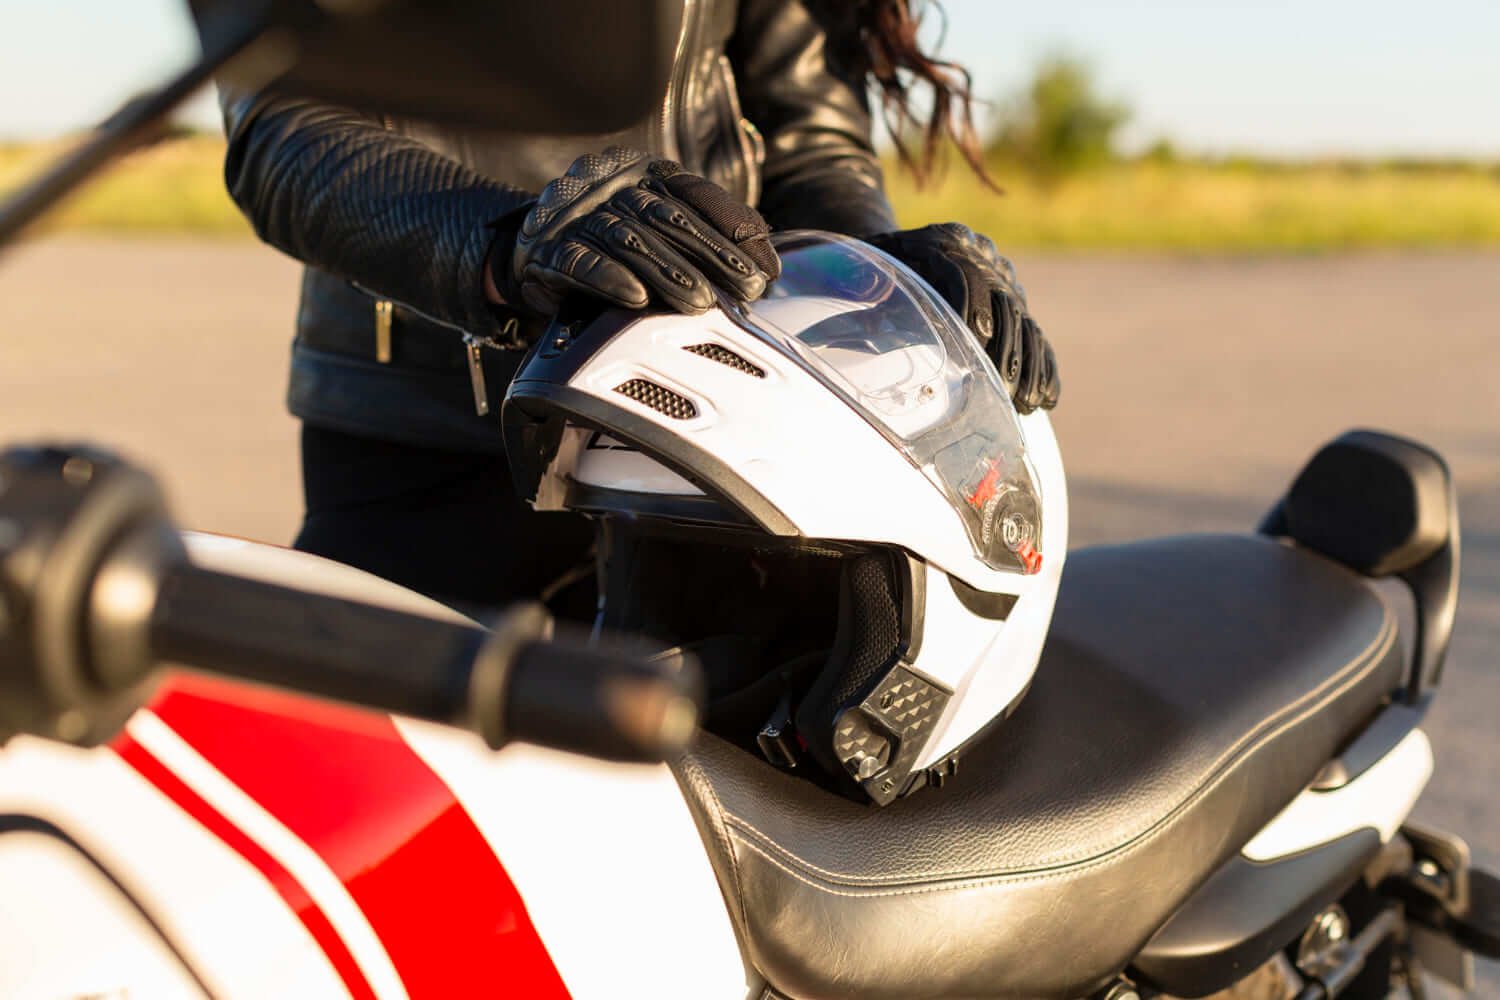 Motociclista con equipo de protección